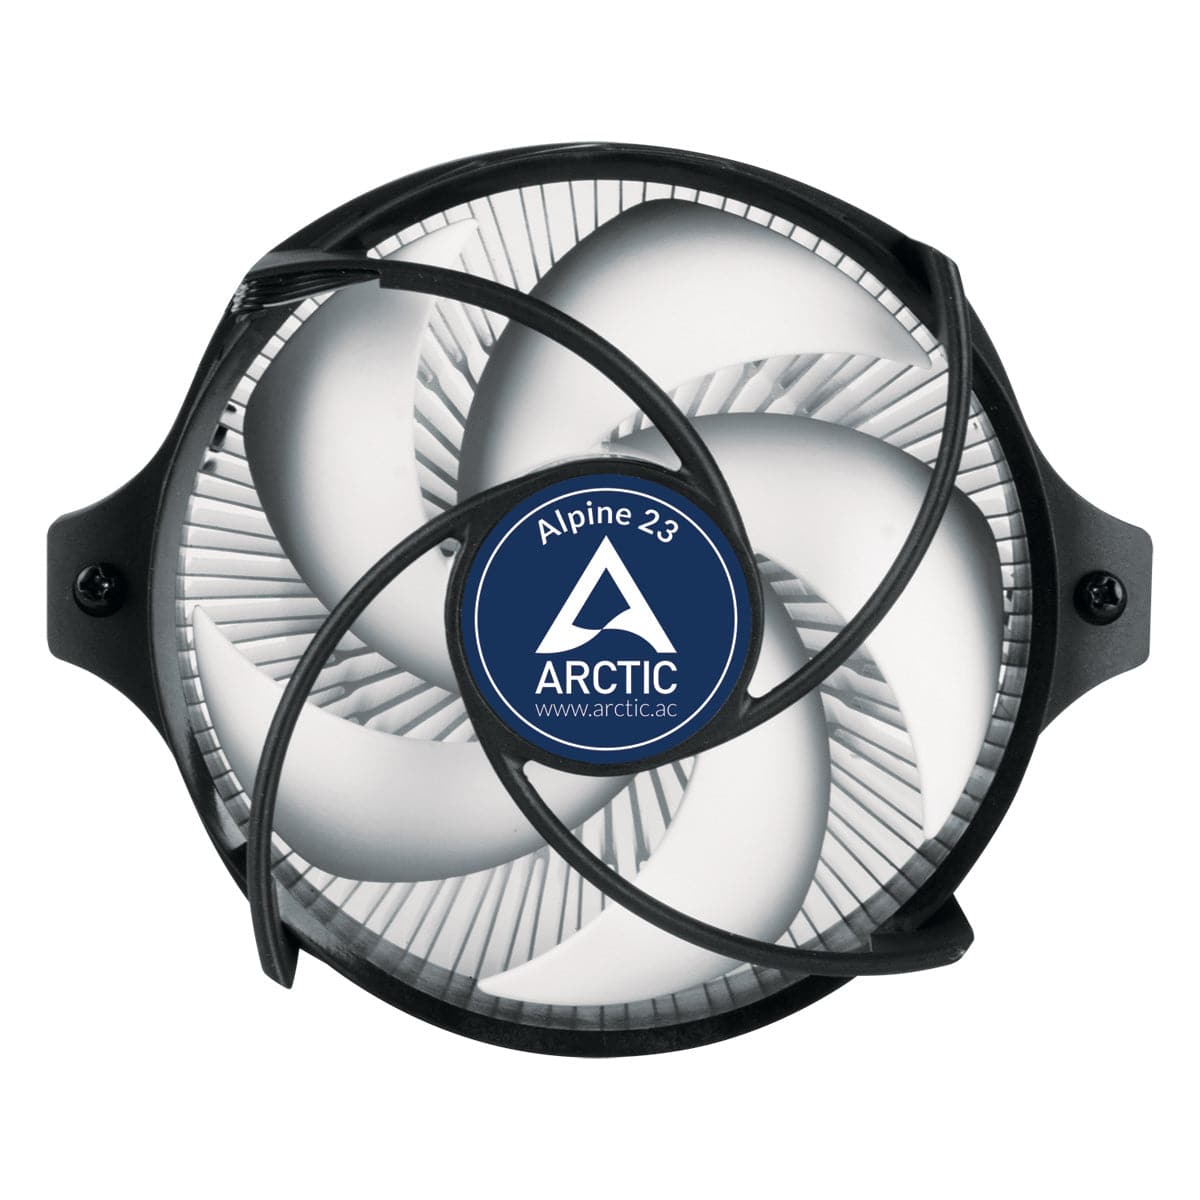 ARCTIC Alpine 23 Processor-køler ARCTIC